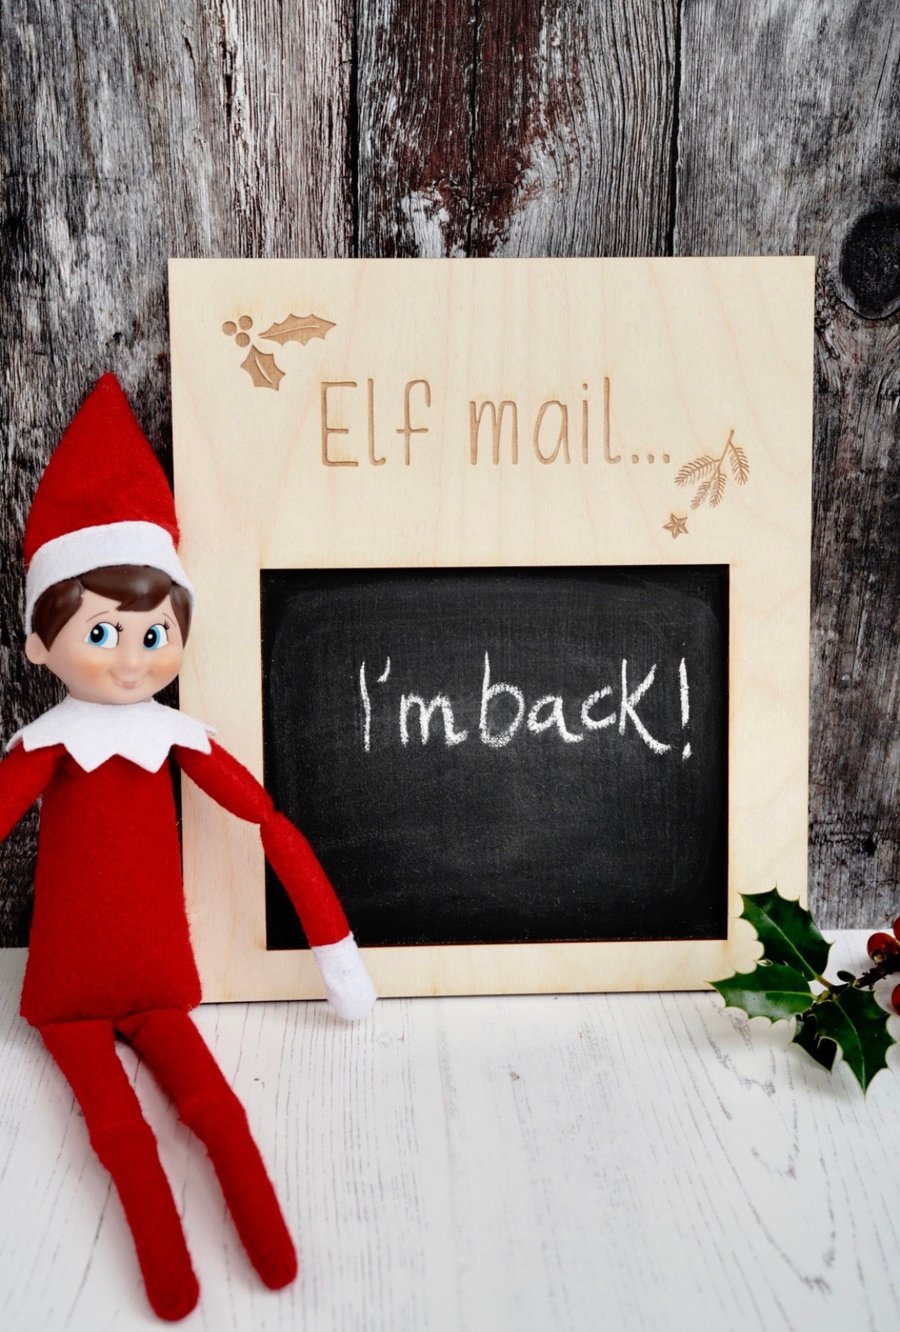 Elf mail chalkboard